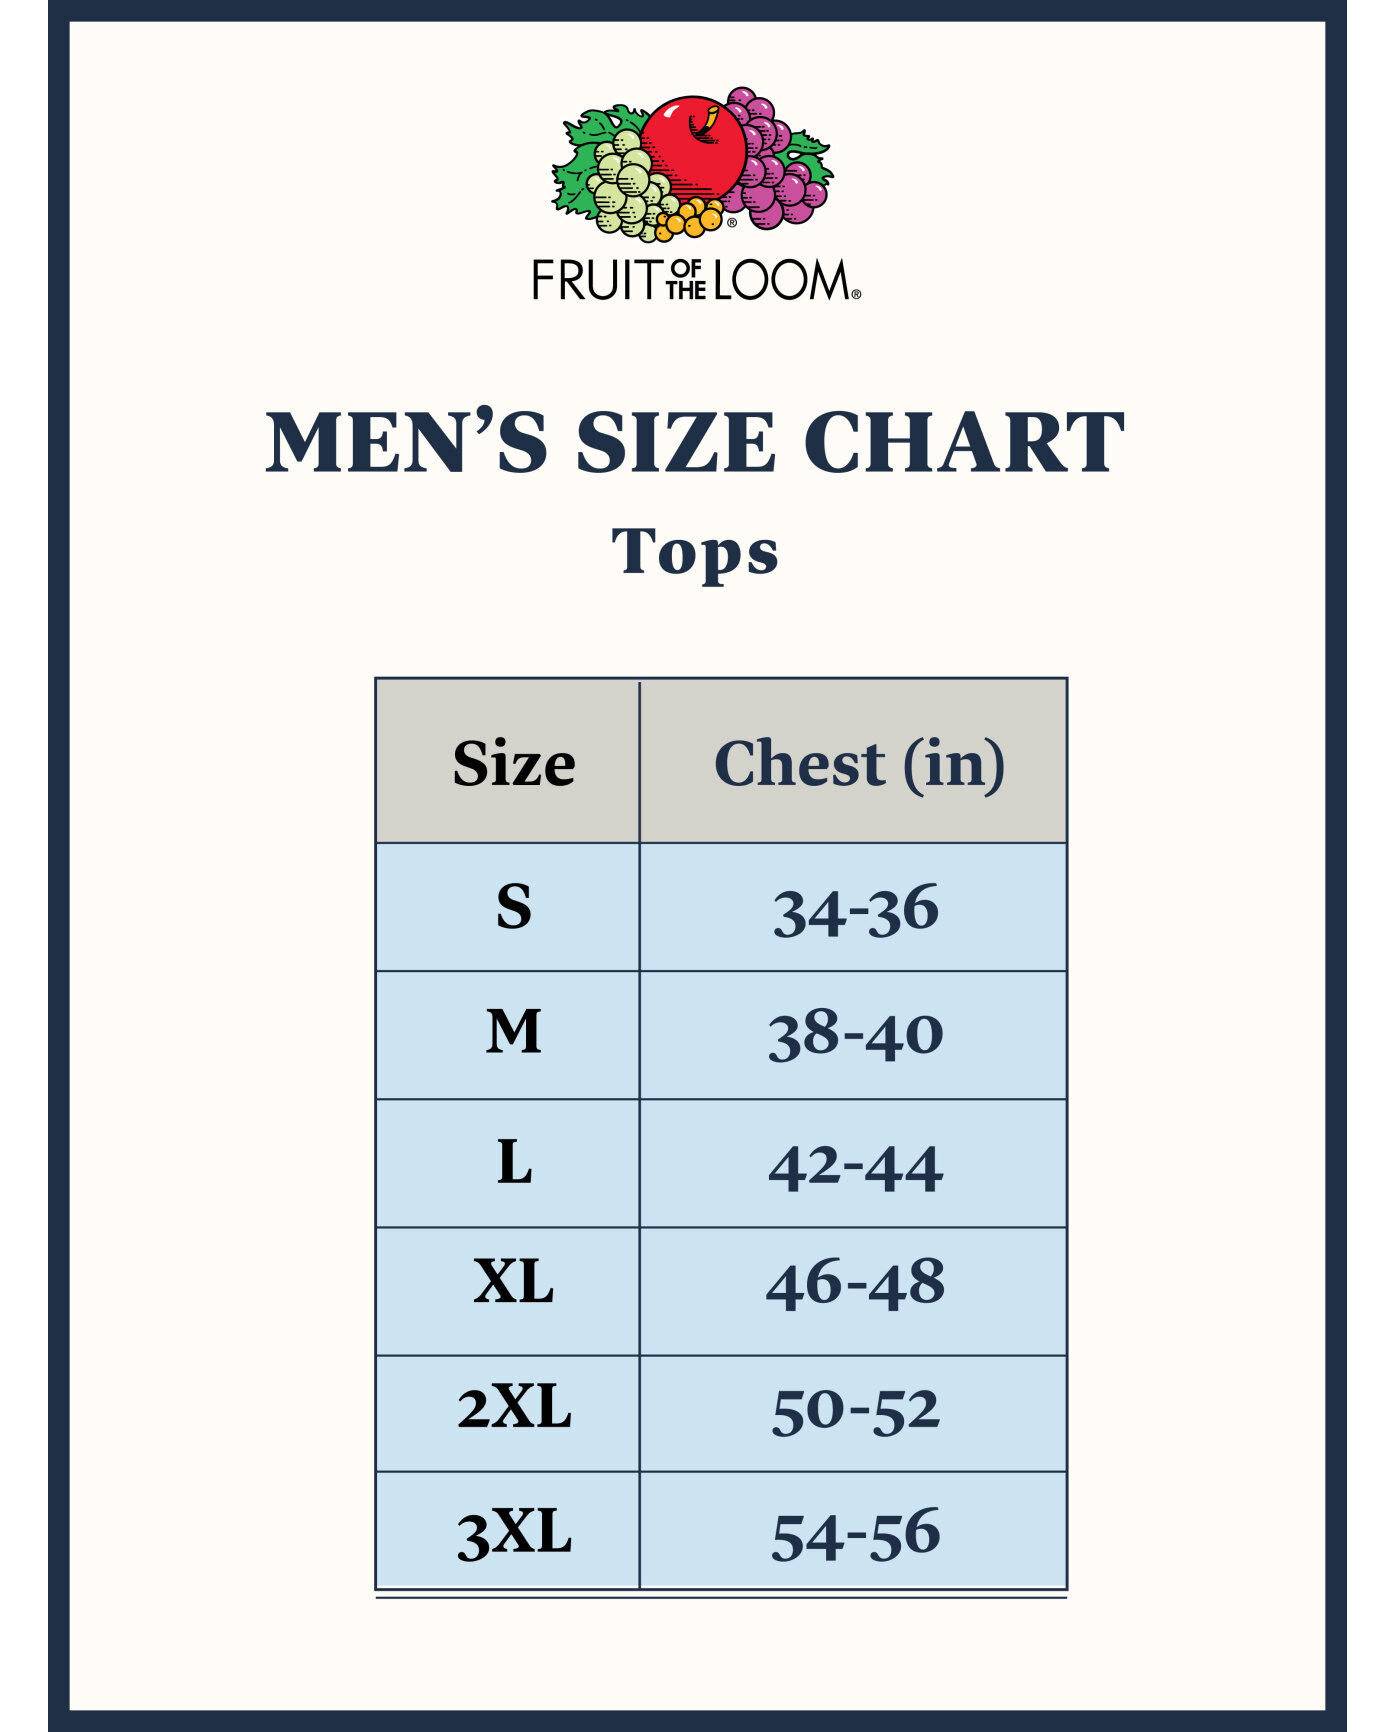 size 42 for men